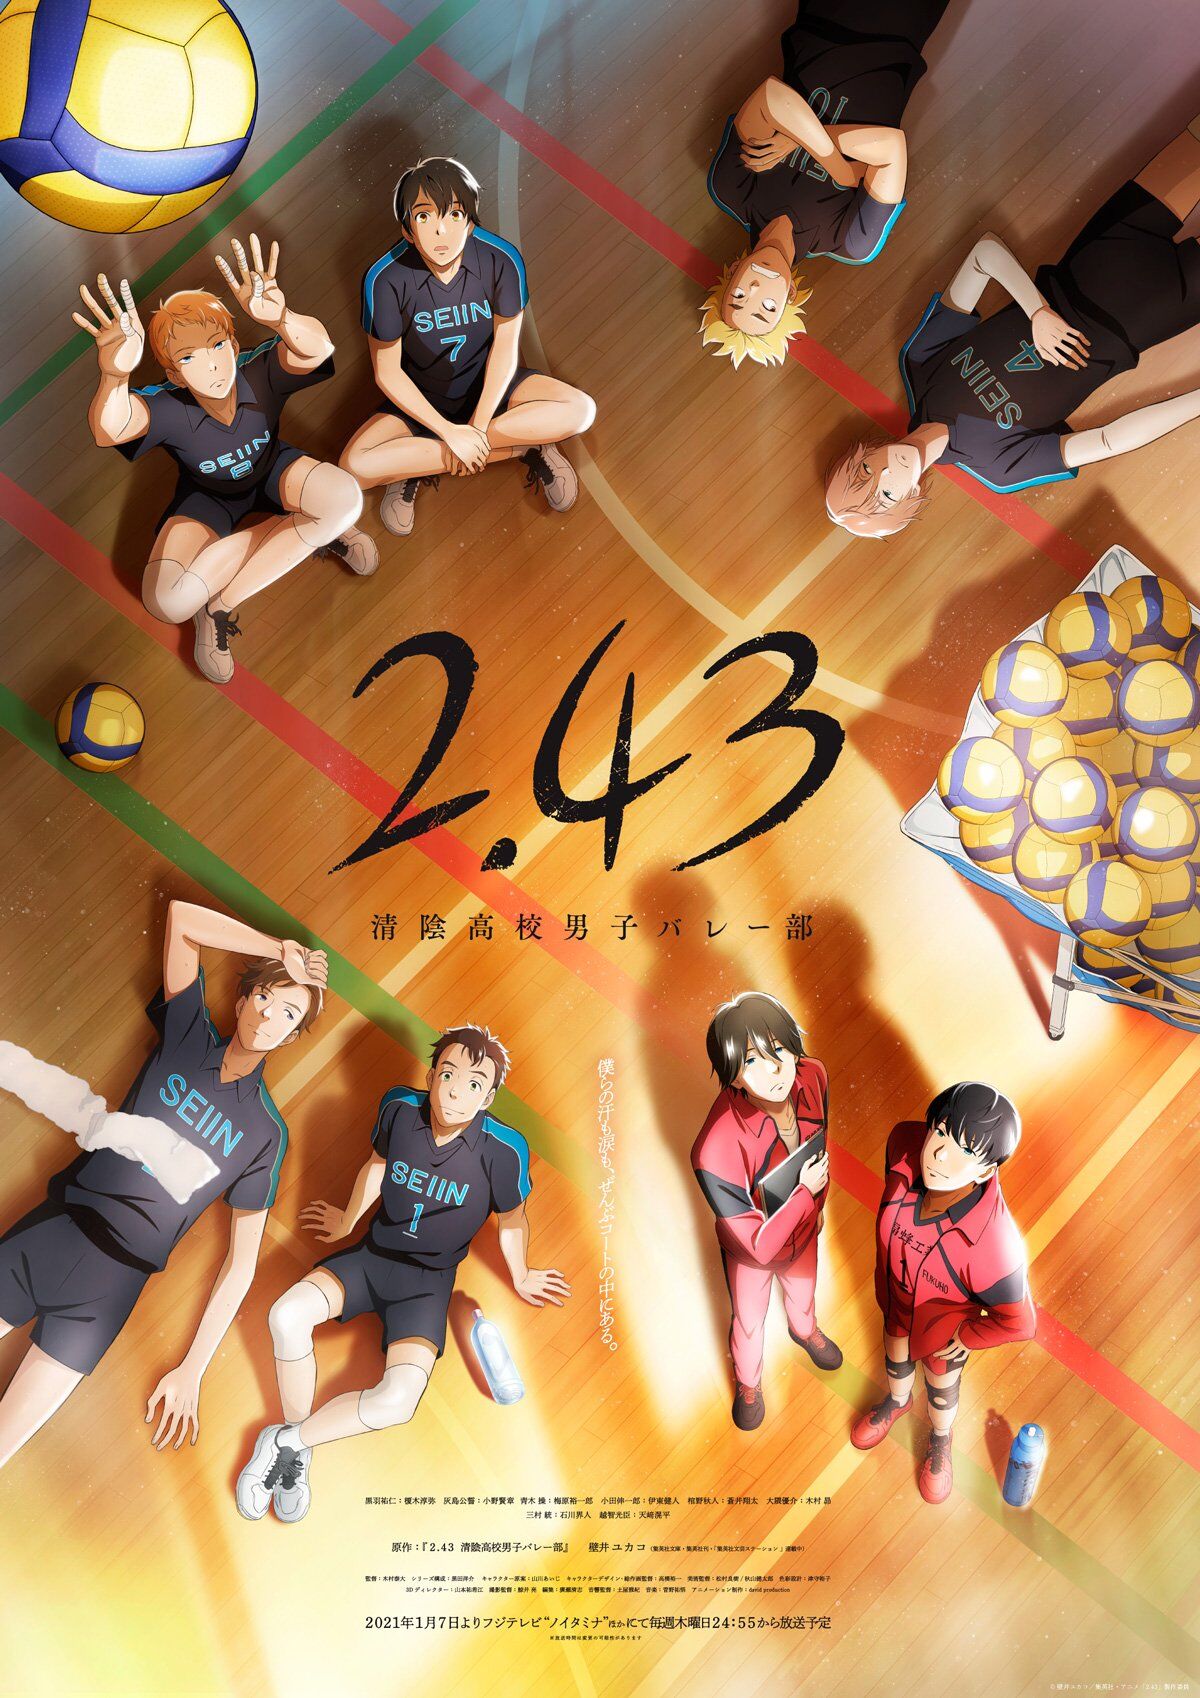 Top 5 Best soccer anime on Netflix & Hulu 2023 - Seinen Manga